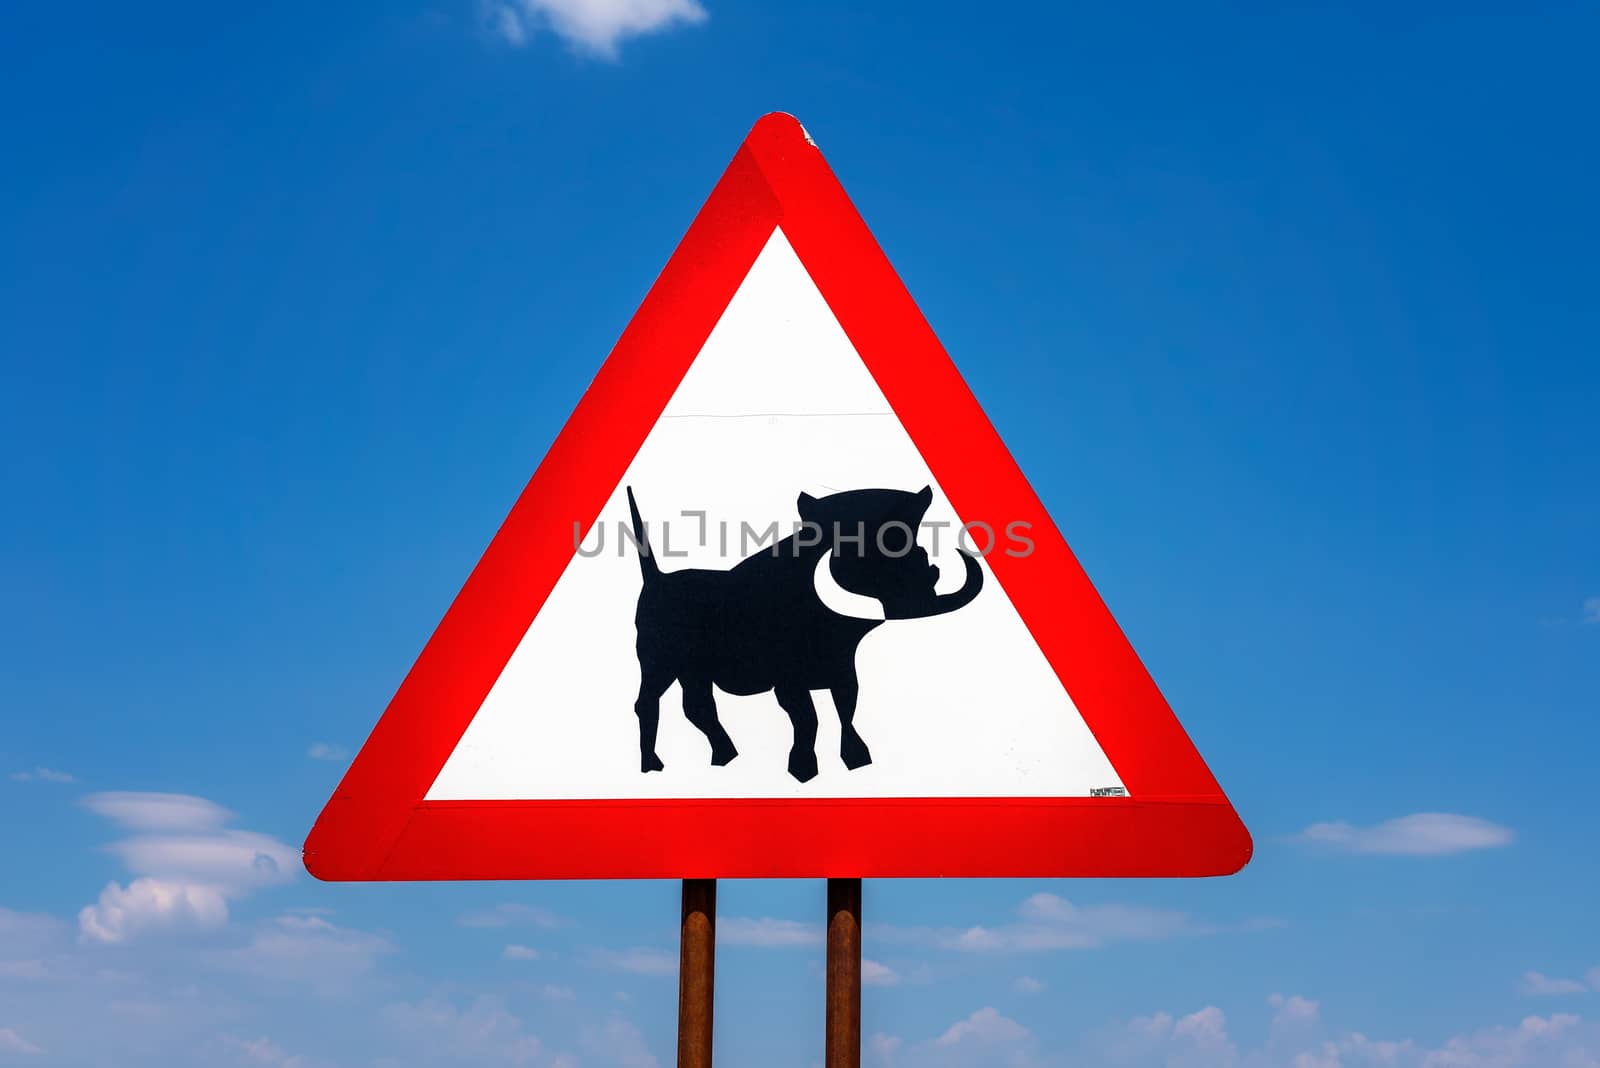 Warthogs crossing warning road sign by nickfox